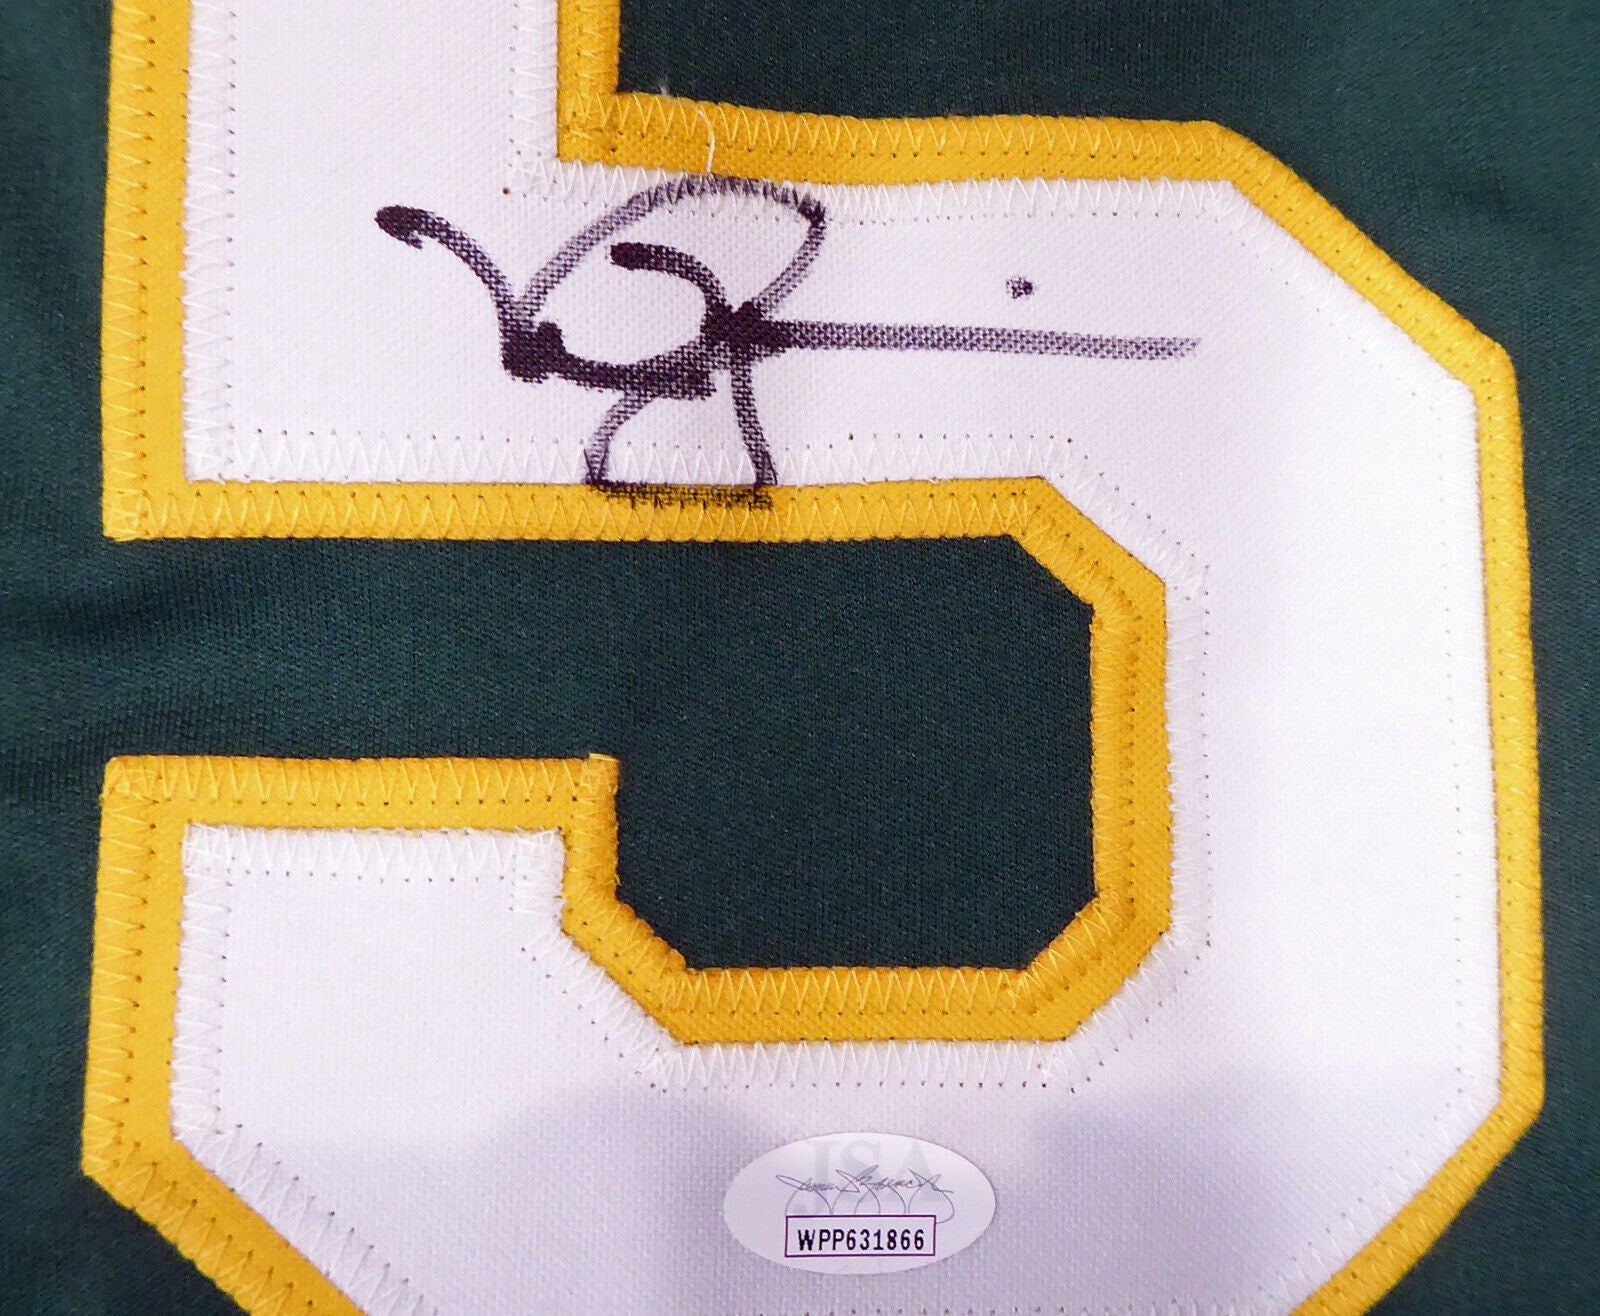 Oakland Athletics Mark McGwire Autographed Framed Green Jersey JSA Stock  #185079